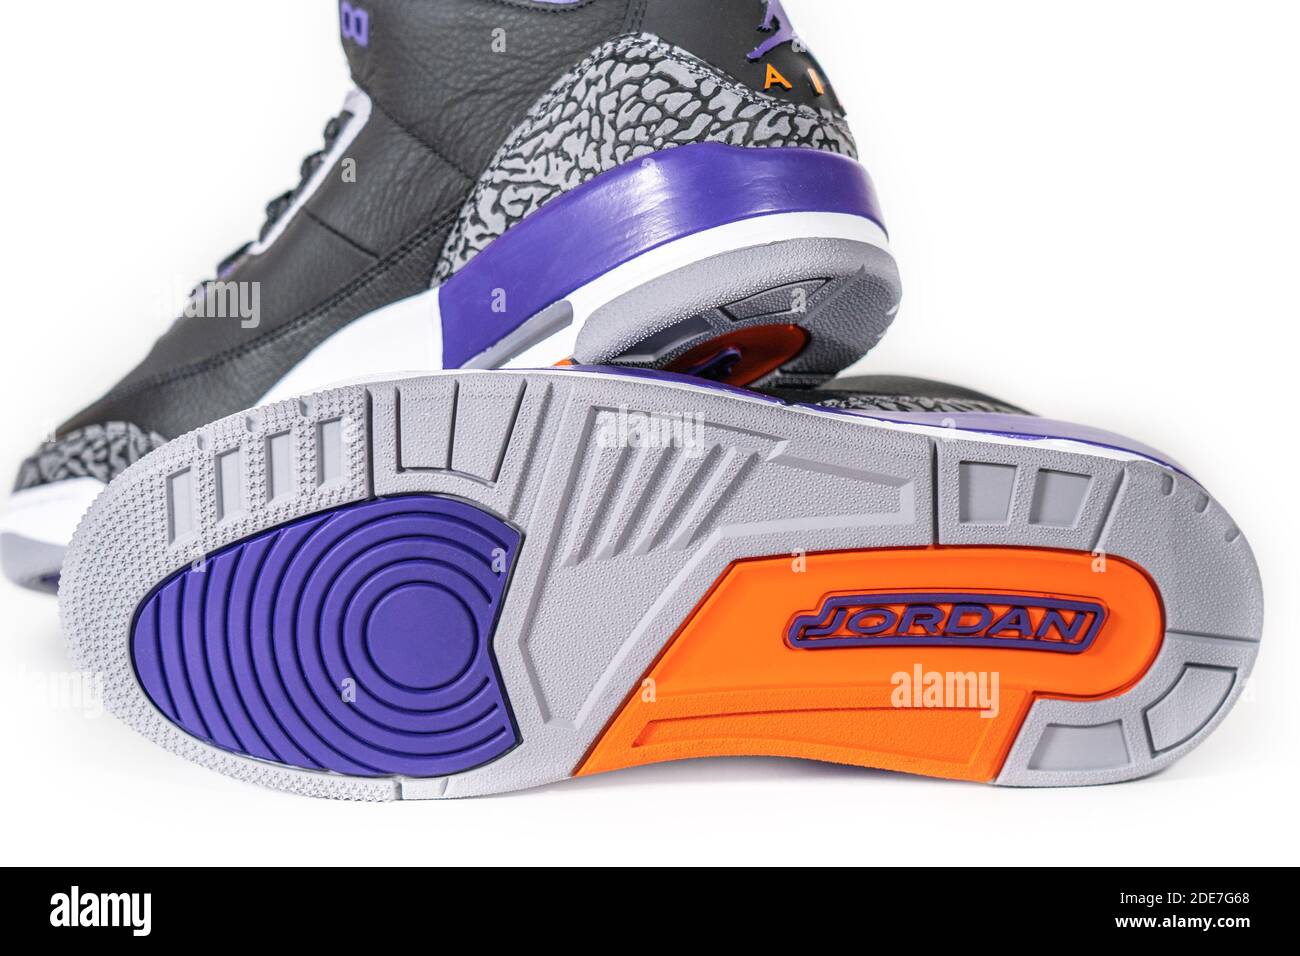 Air Jordan 3 Retro Court Purple - Legendary famous Nike and Jordan